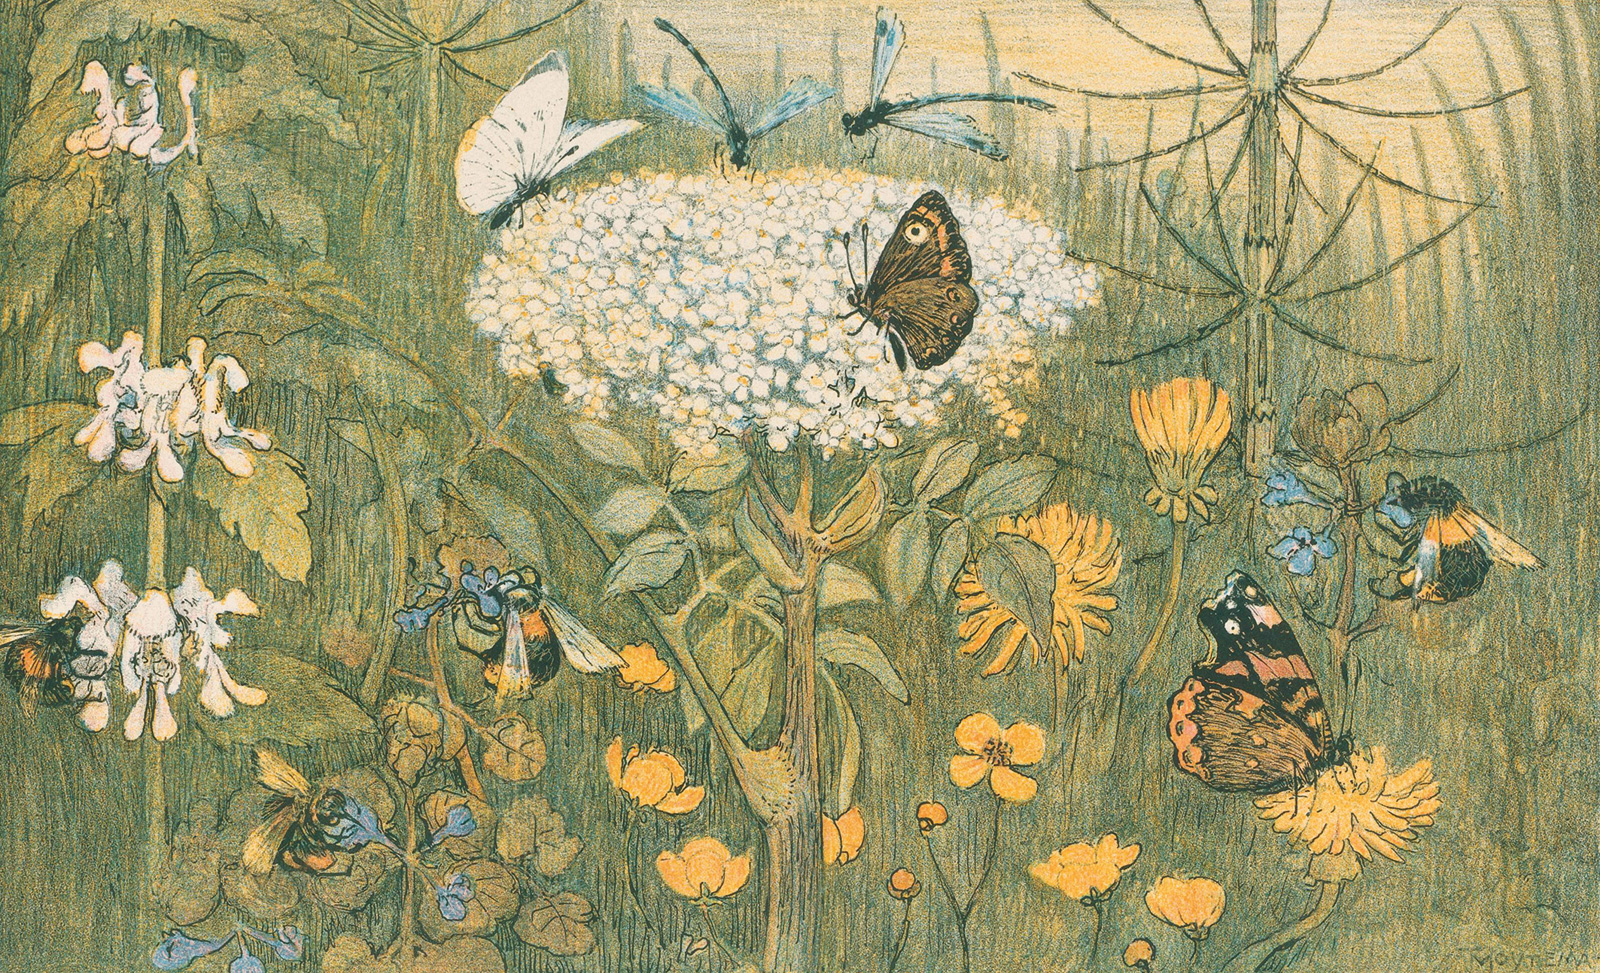 Theo van Hoytema, *Flores y mariposas,* 1910. Rijksmuseum 